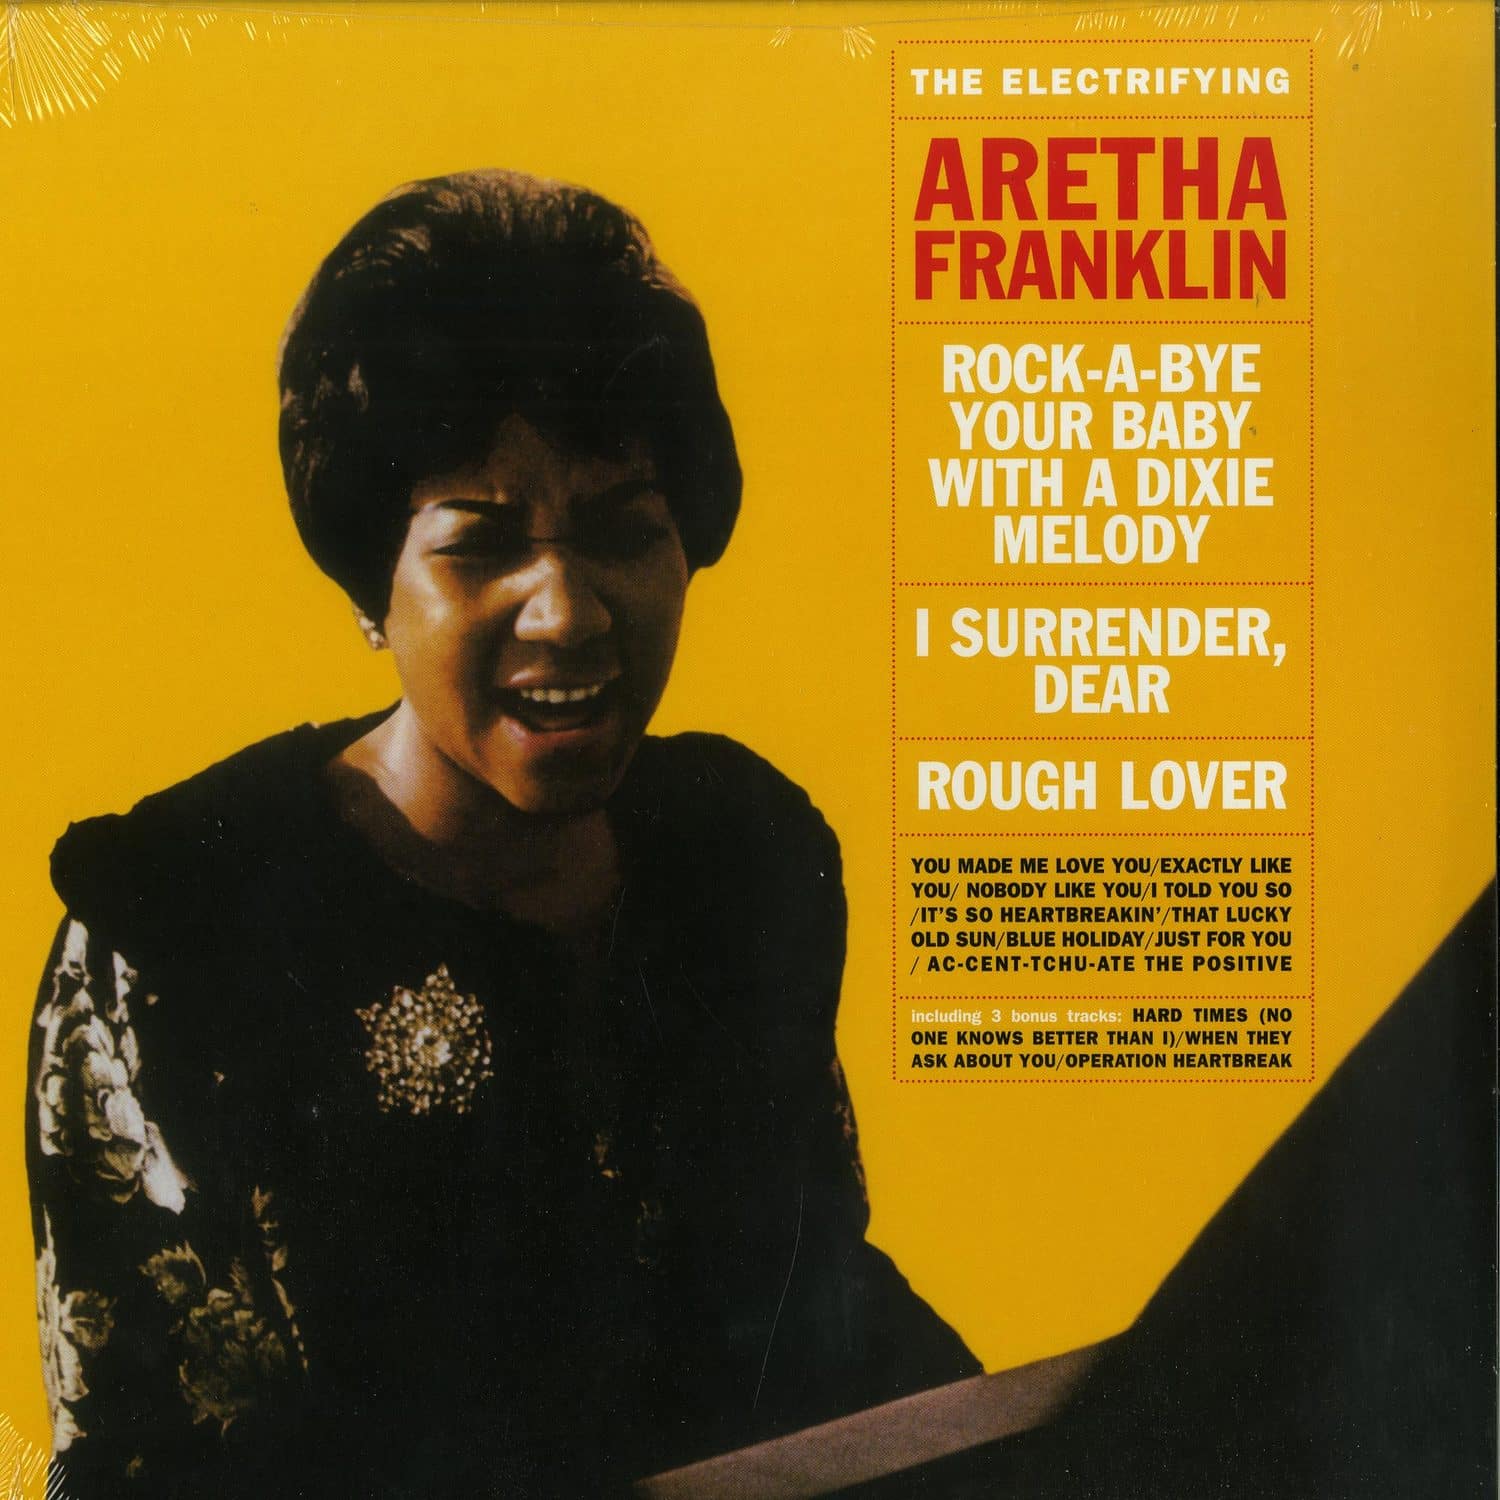 Aretha Franklin - THE ELECTRIFYING 